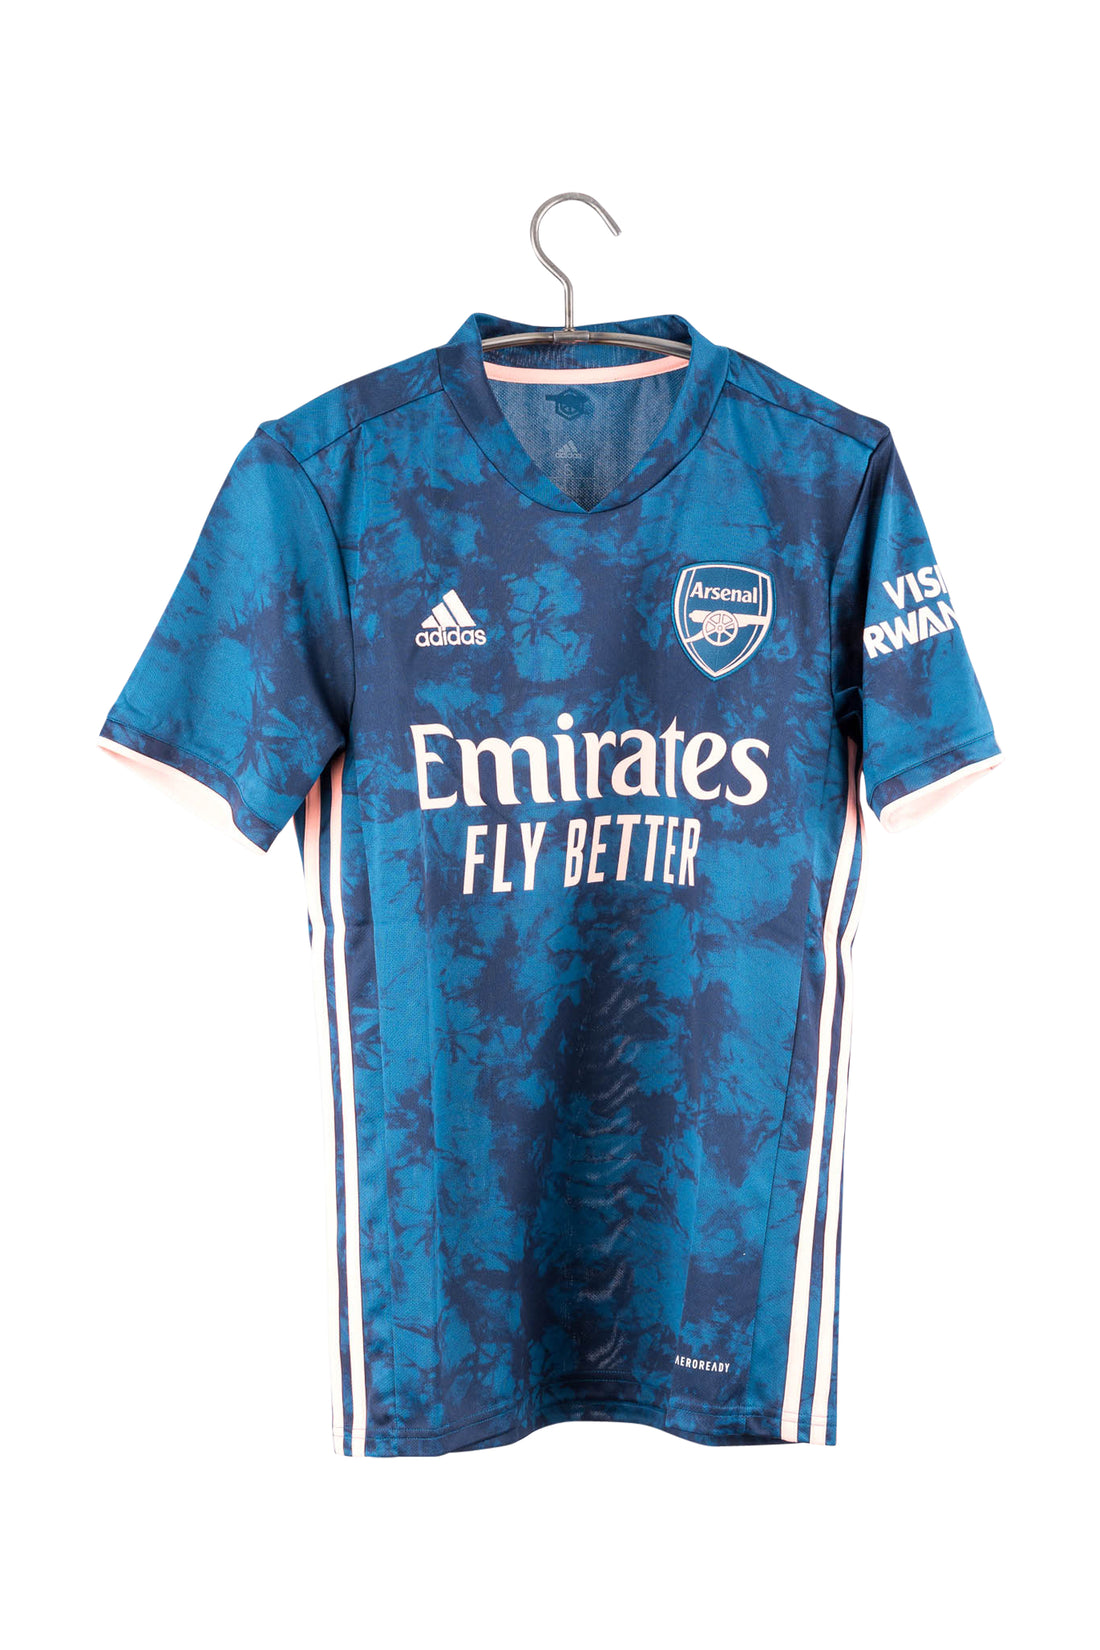 Arsenal 2020 - 2021 Third Football Shirt